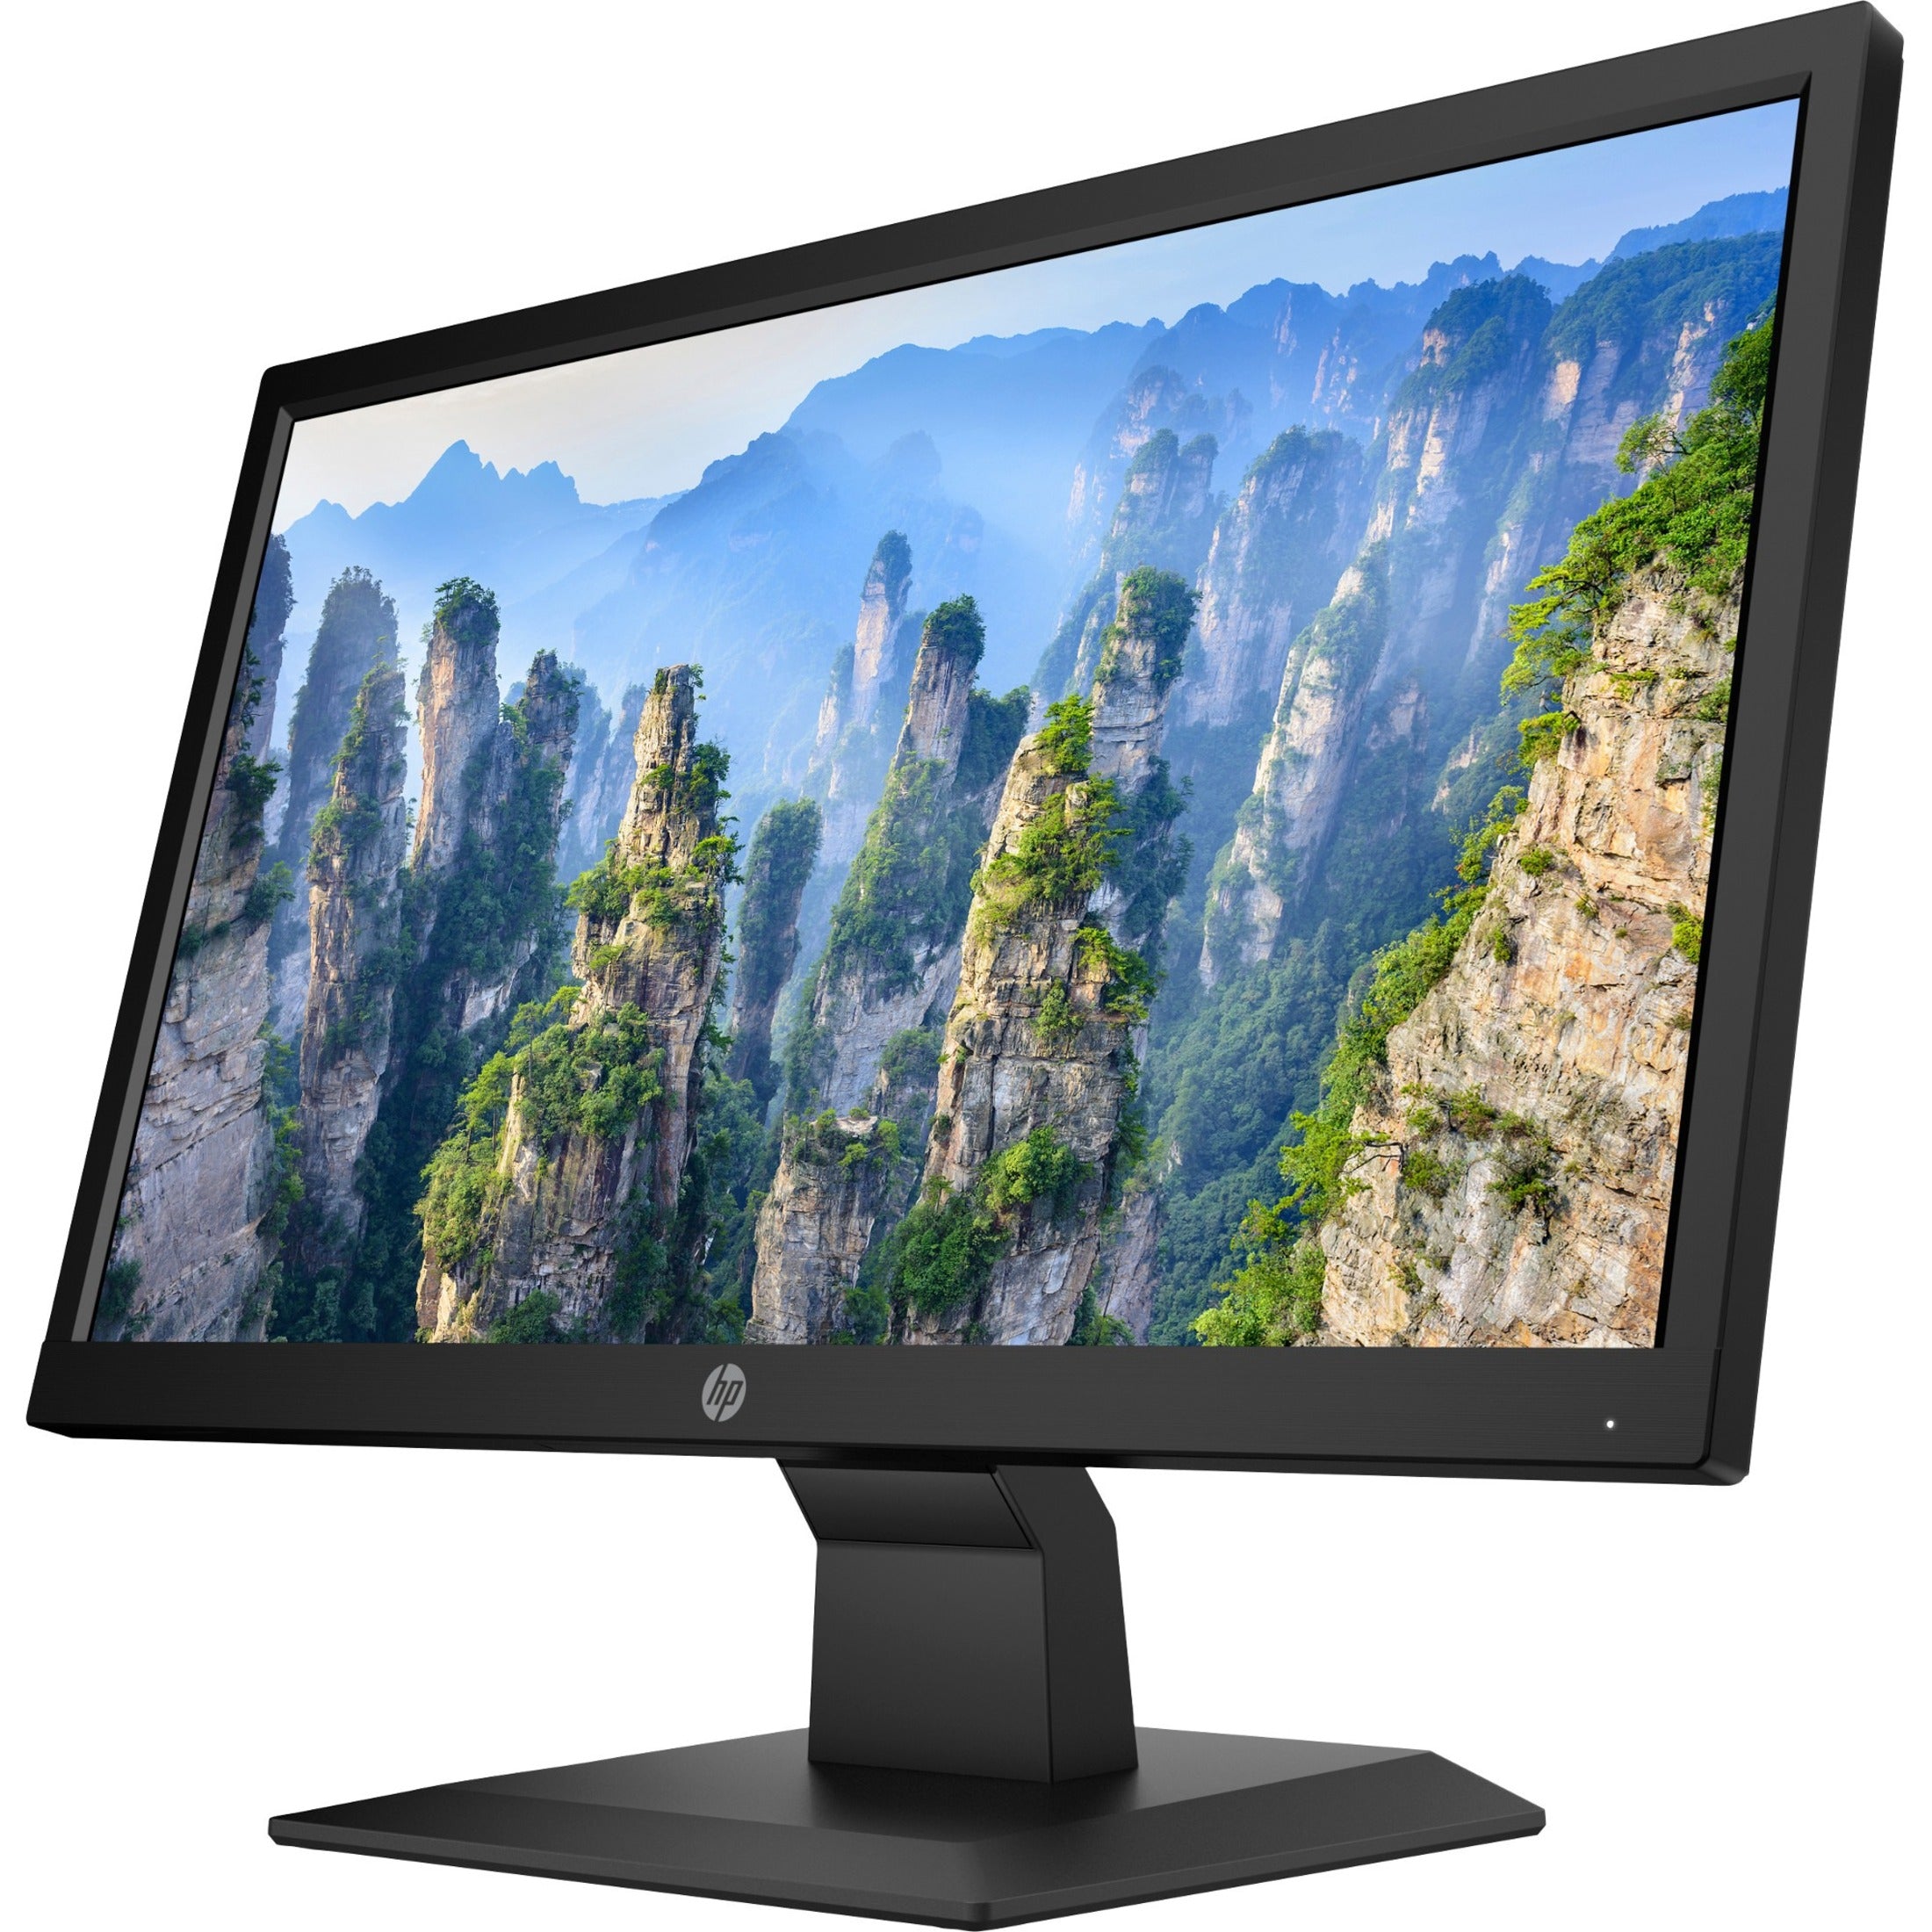 HP V20 Widescreen LCD Monitor, 19.5 HD+ Display, 16:9 Aspect Ratio, Black